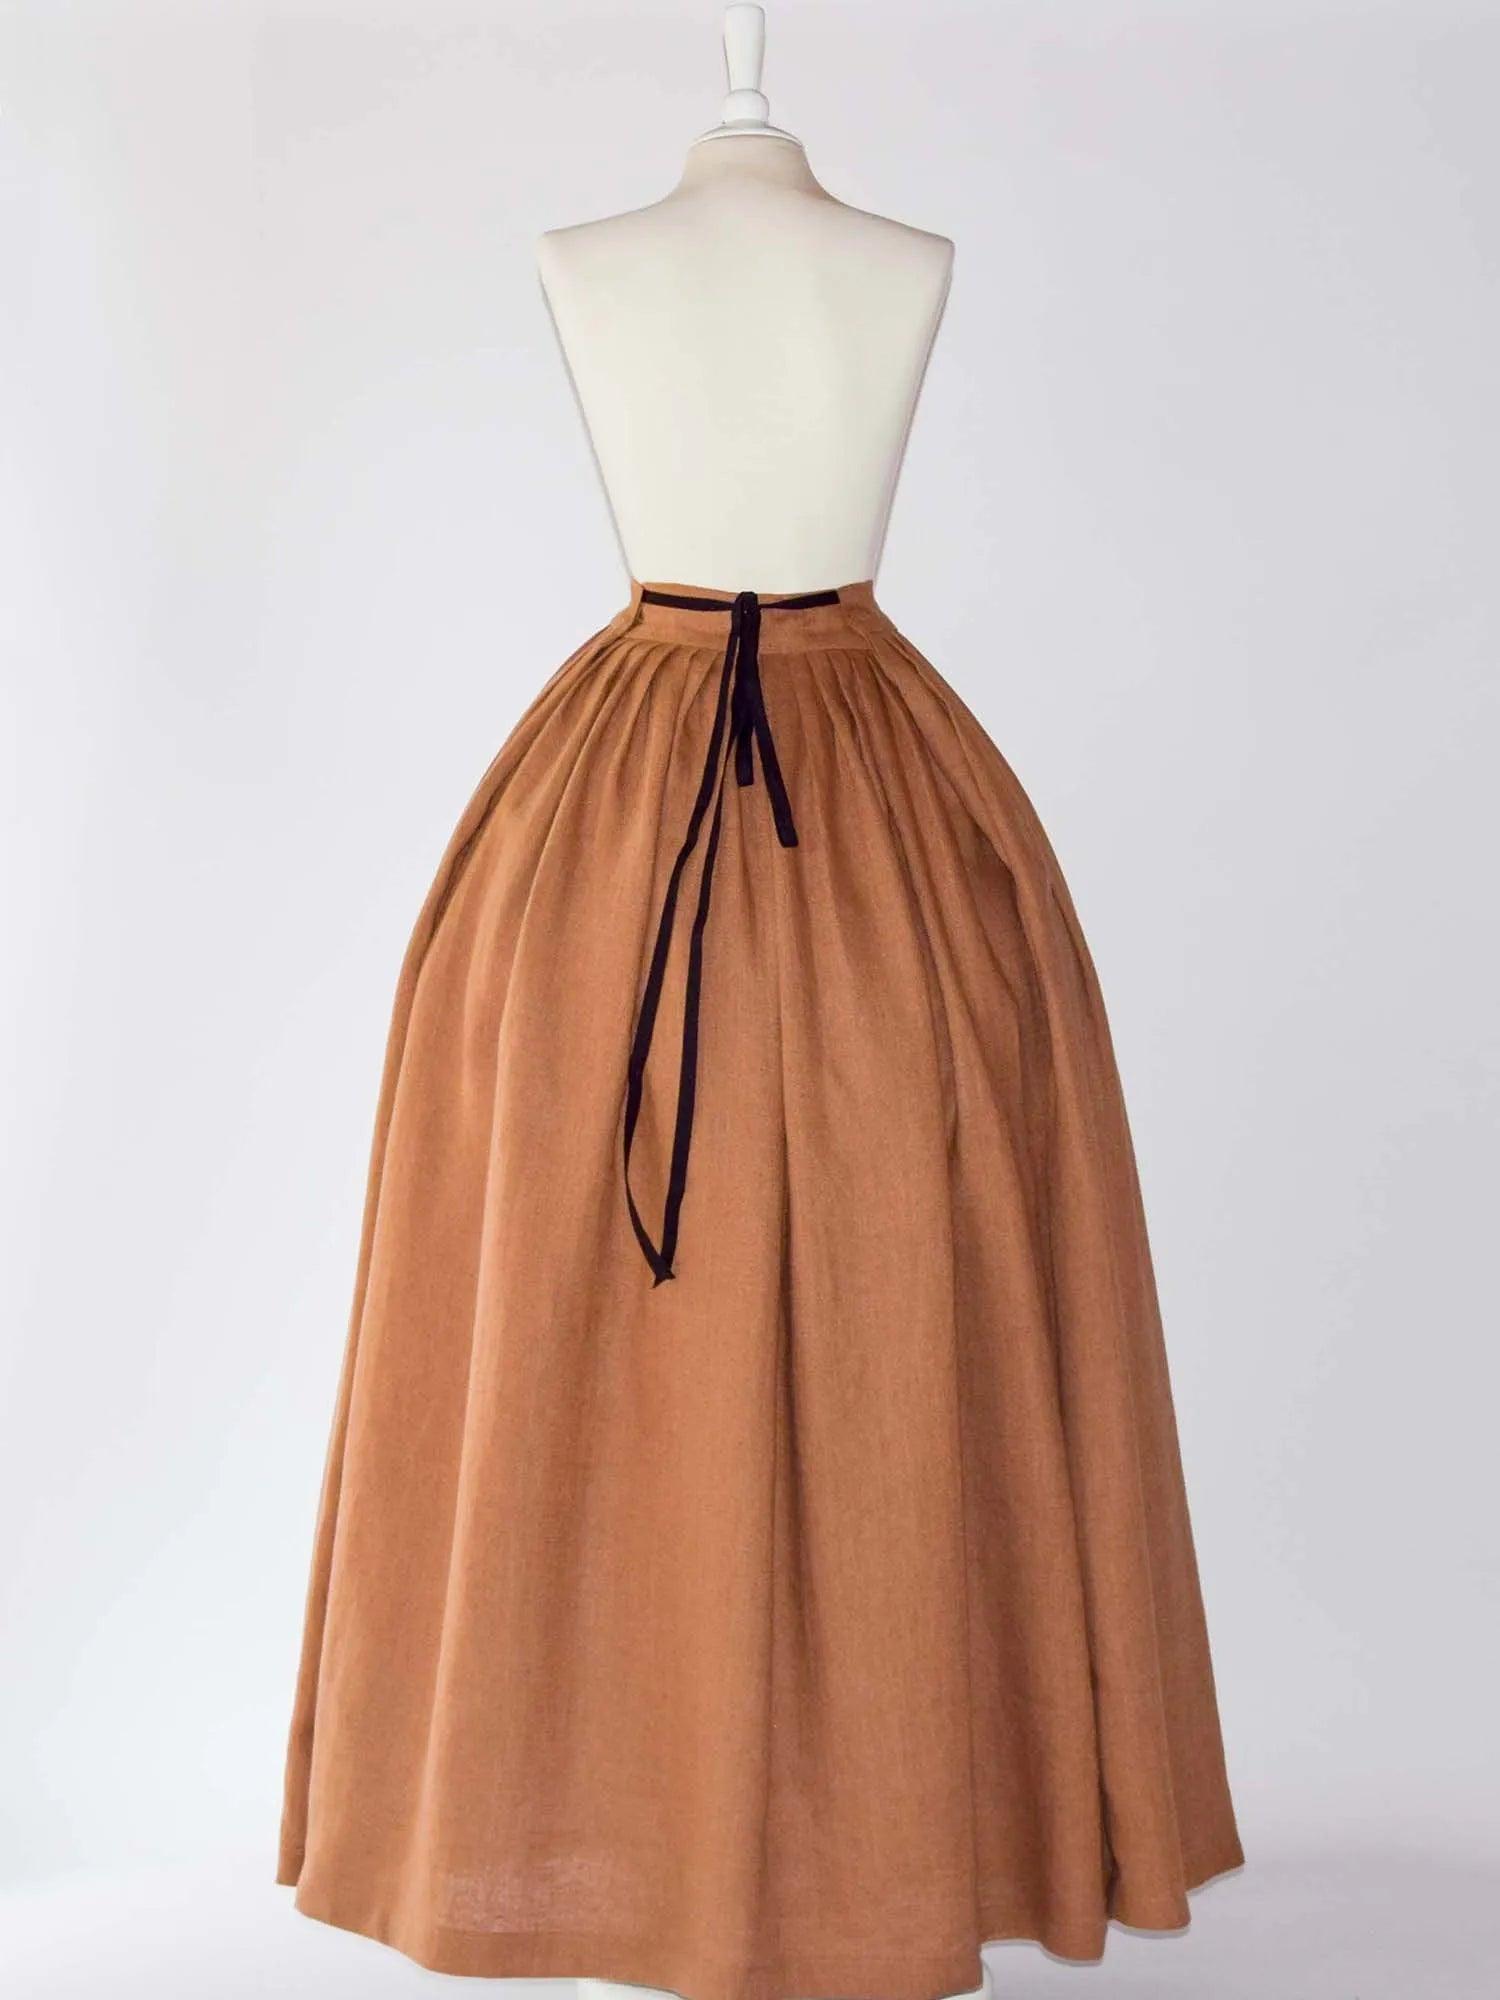 HELOISE, Historical Skirt in Toffee Linen - Atelier Serraspina